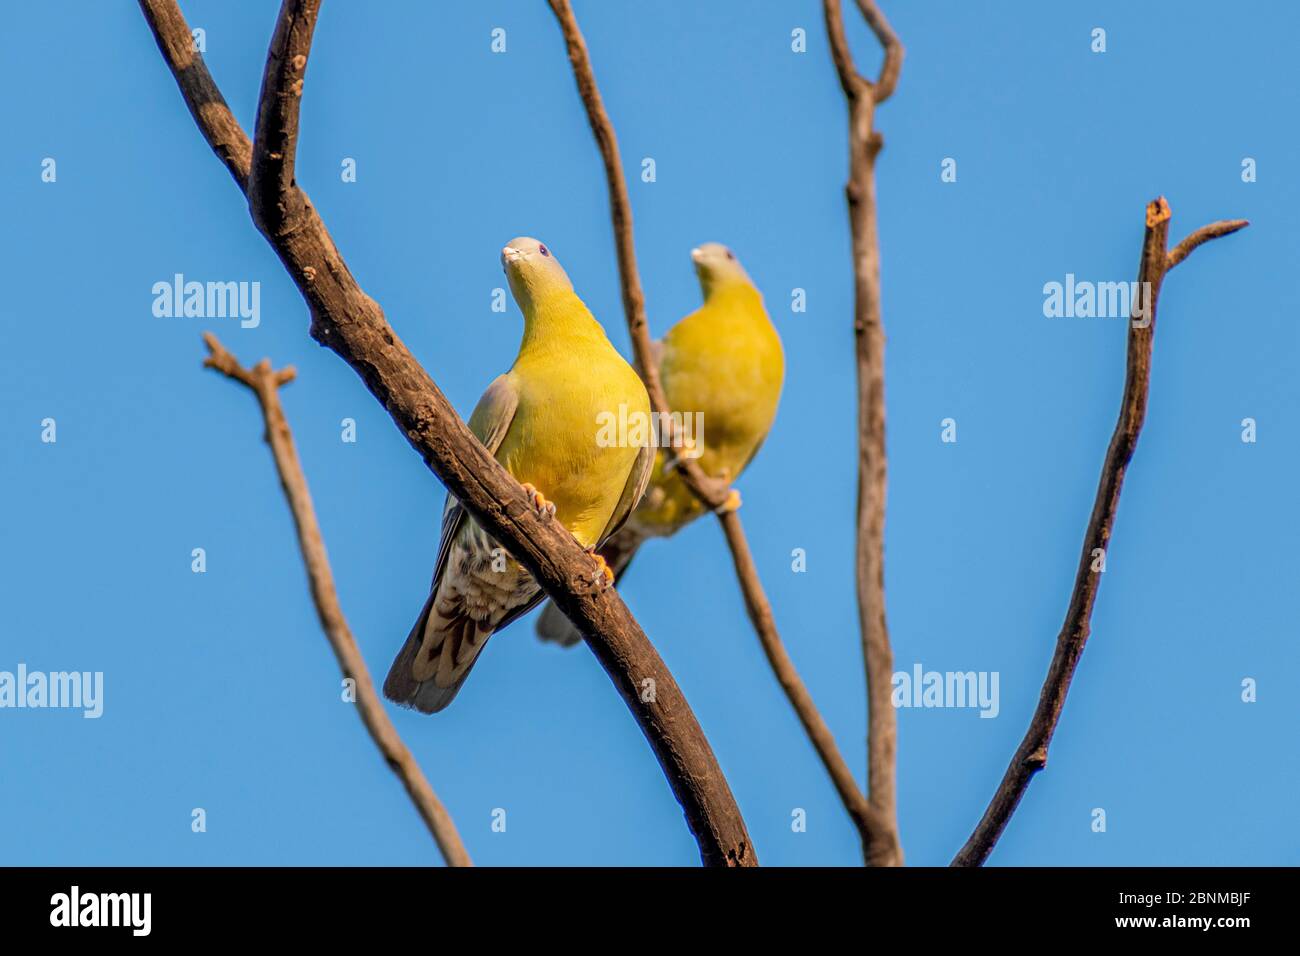 Bird of maharashtra hi-res stock photography and images - Alamy